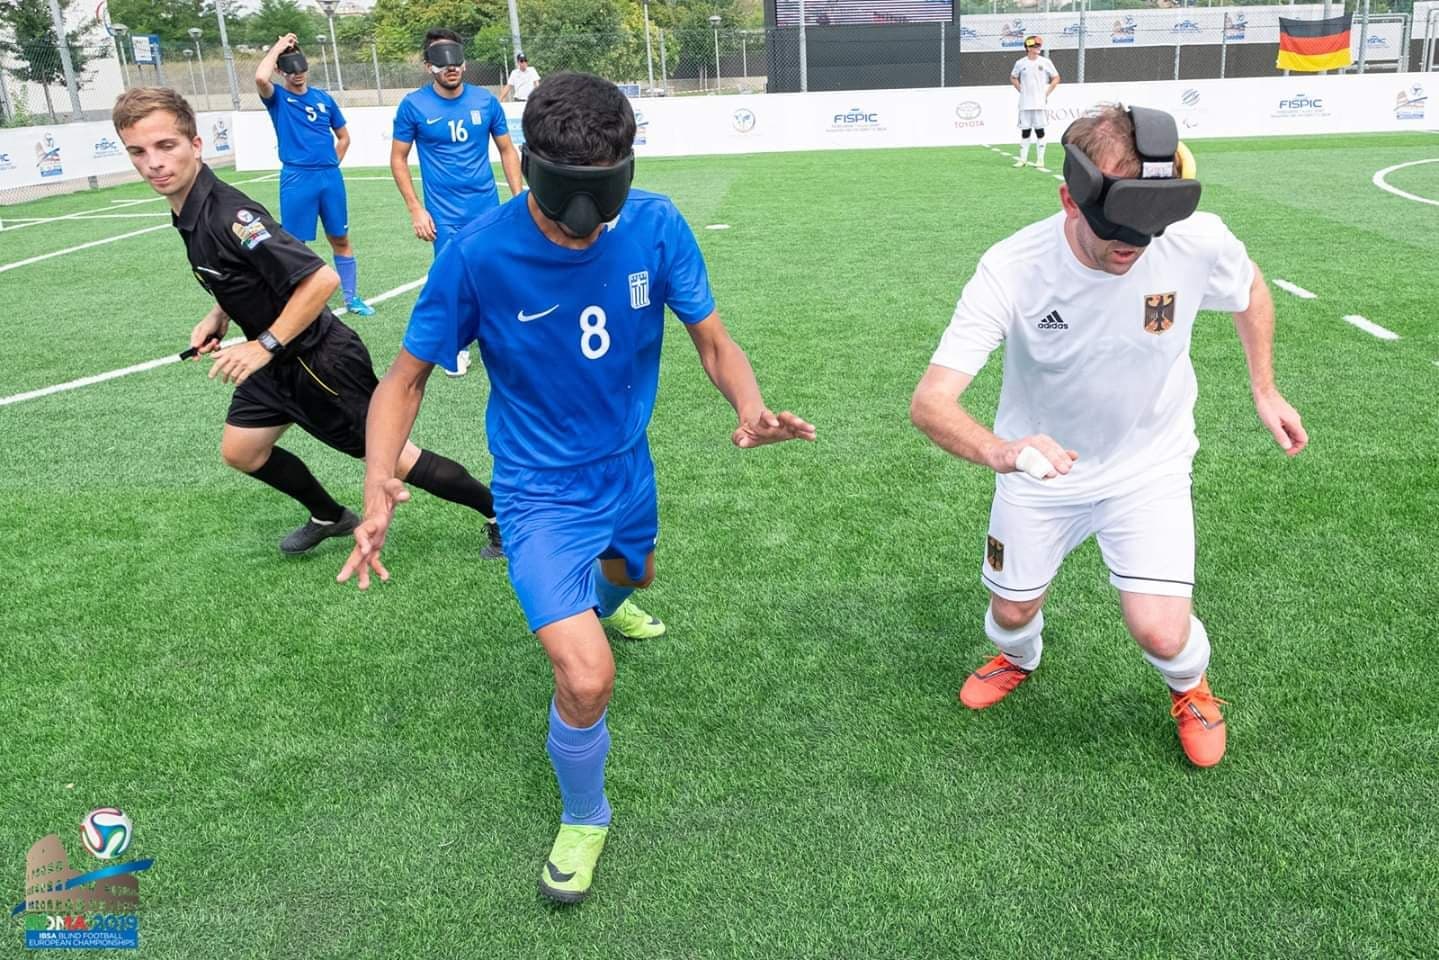 Blindenvoetbal wacht in België op erkenning